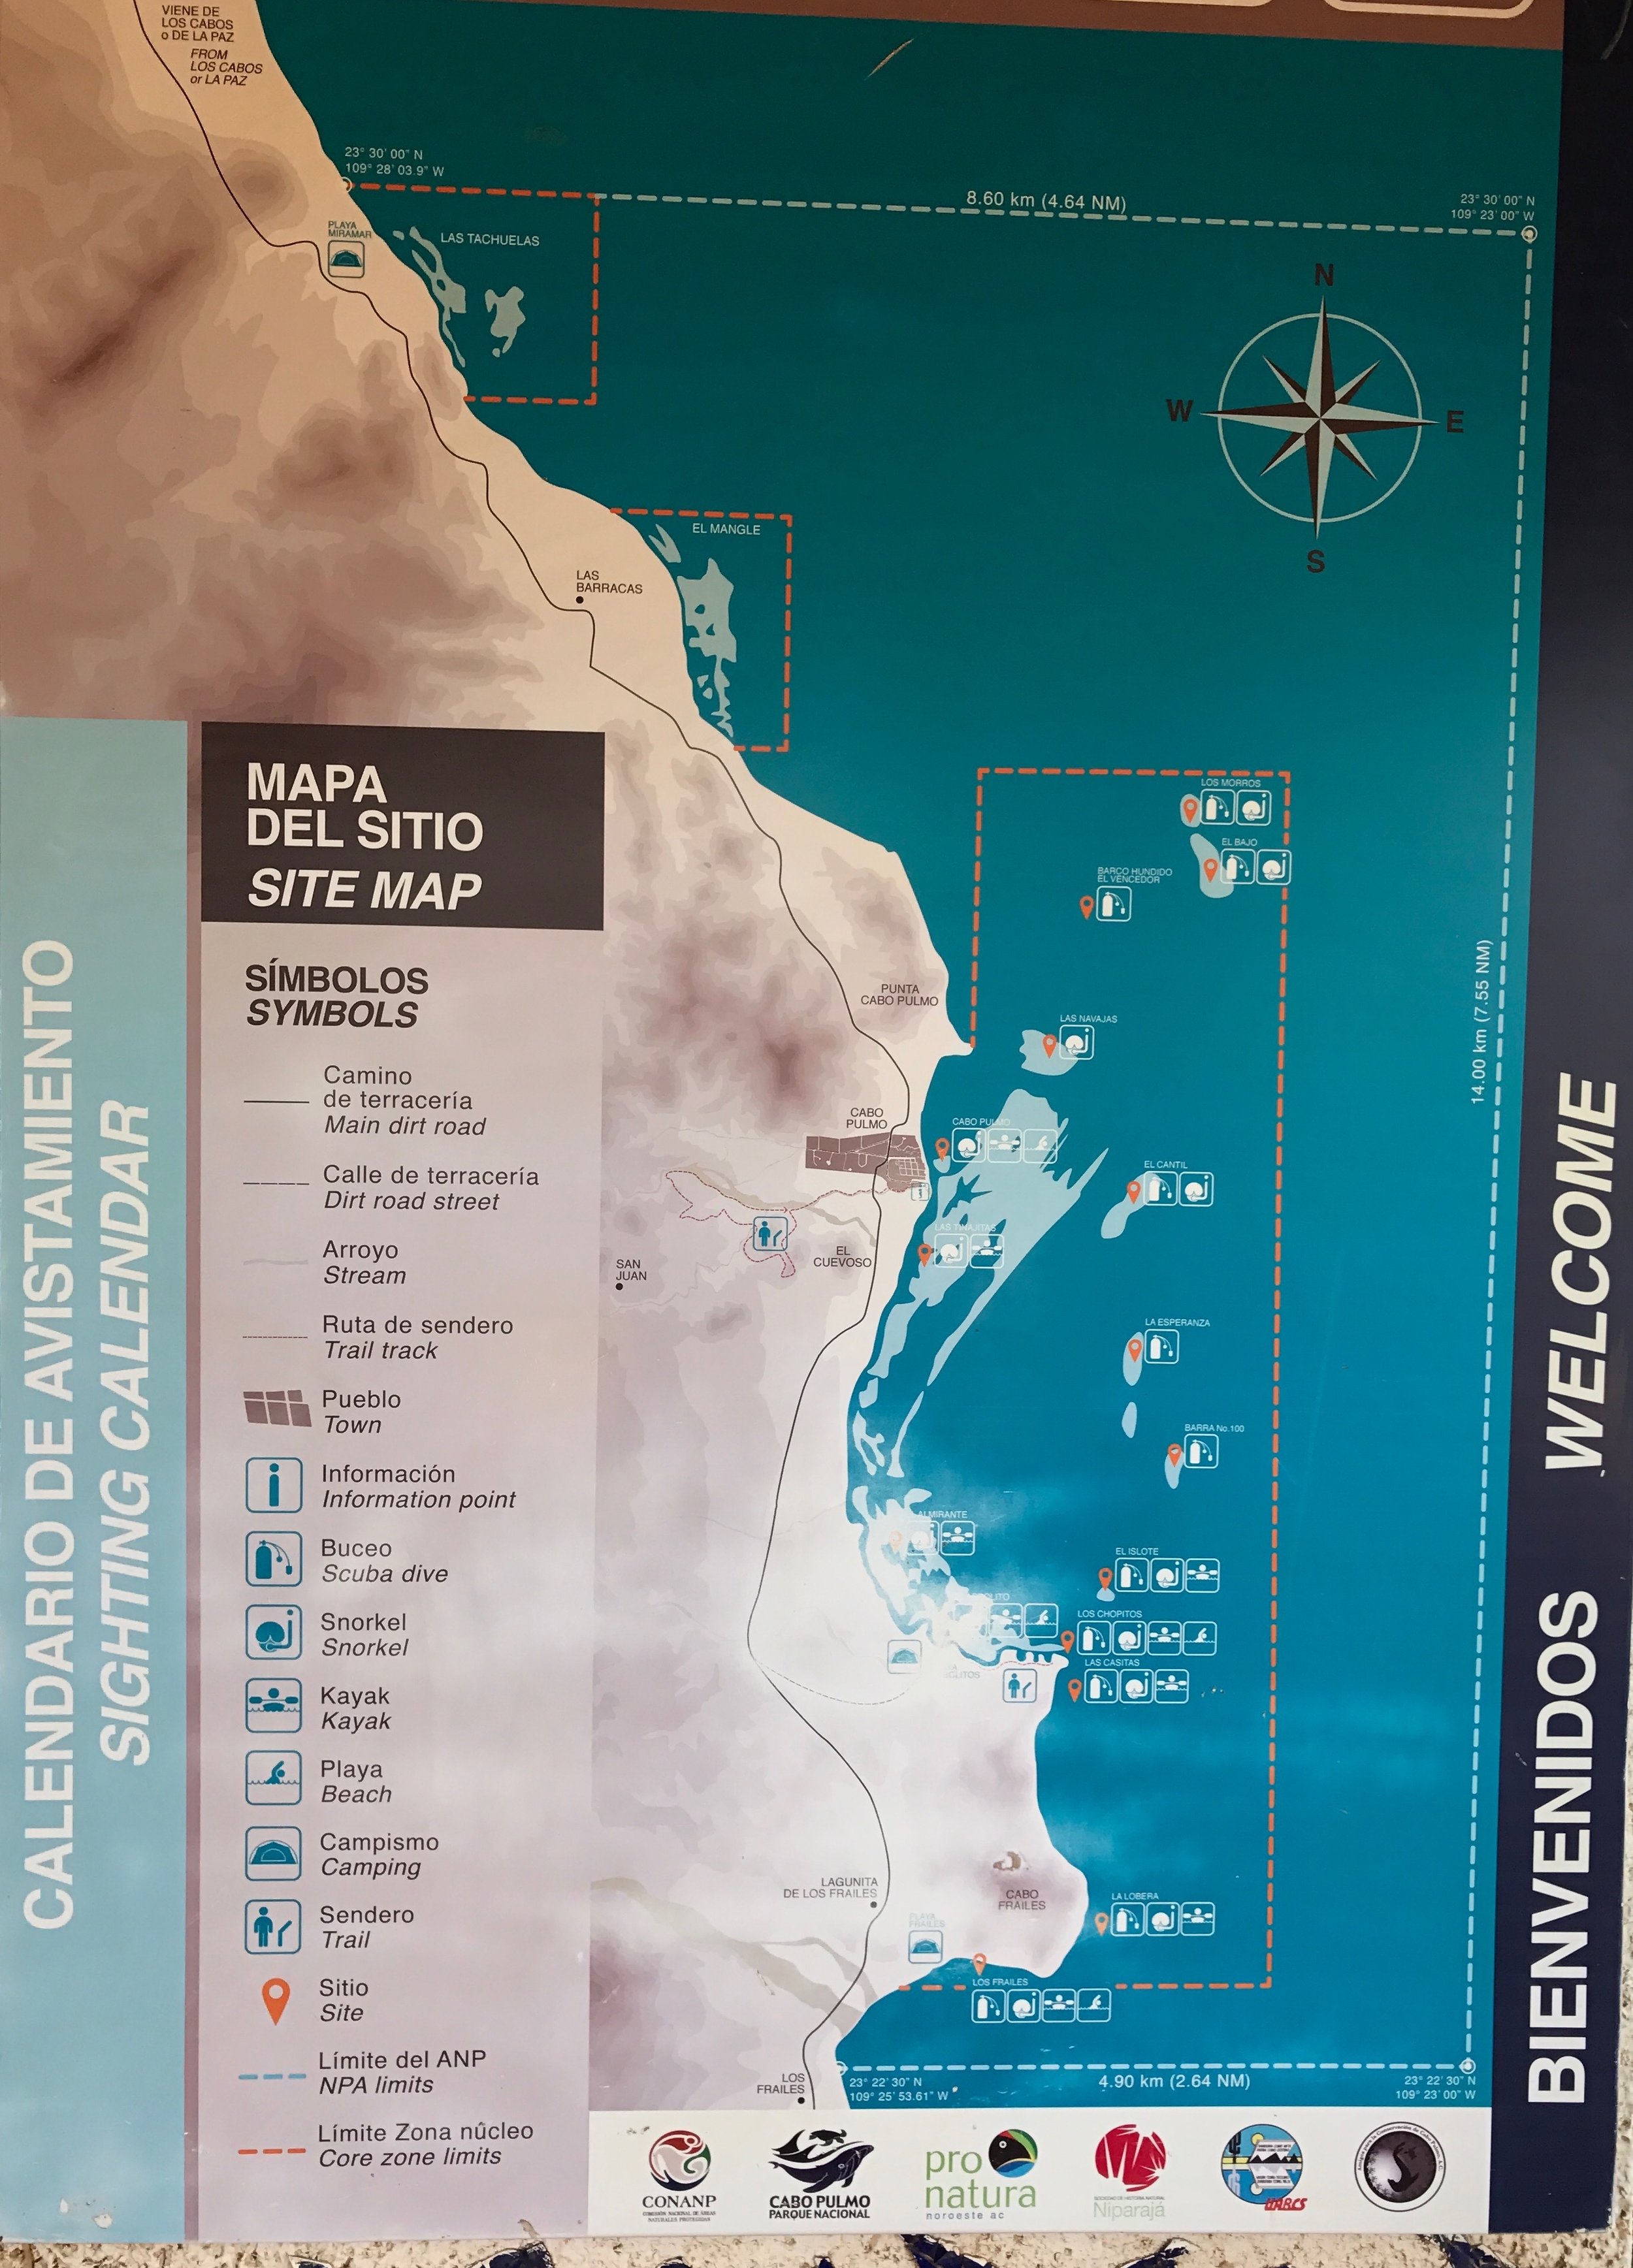 Cabo Pulmo Dive sites